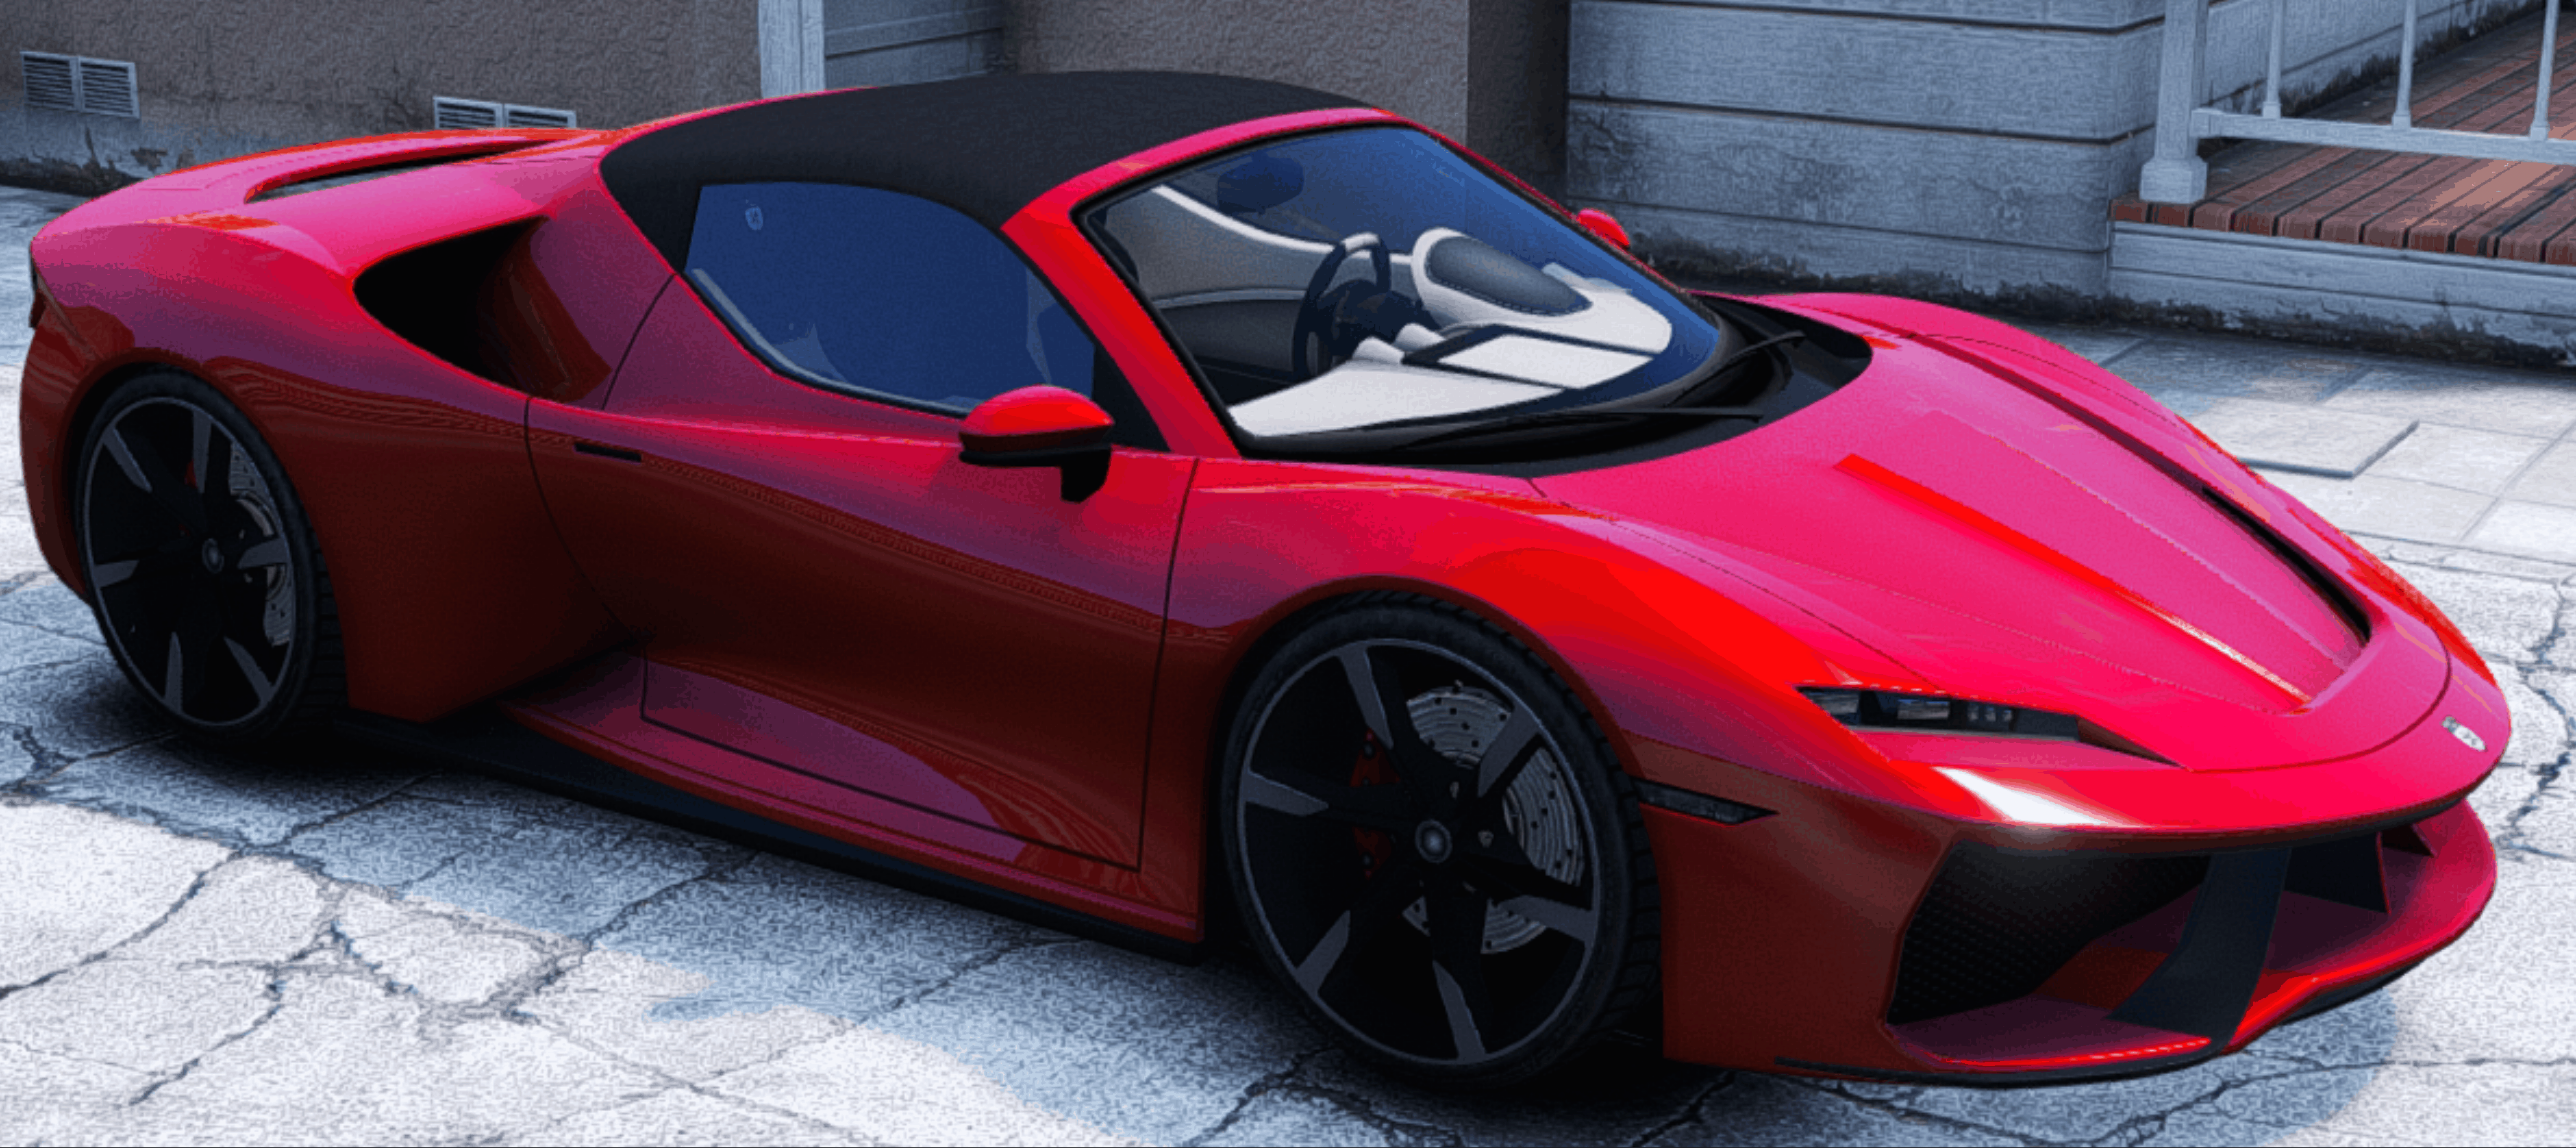 Grotti Itali Rsx Roadster 1 0 Gta 5 Mod Grand Theft Auto 5 Mod